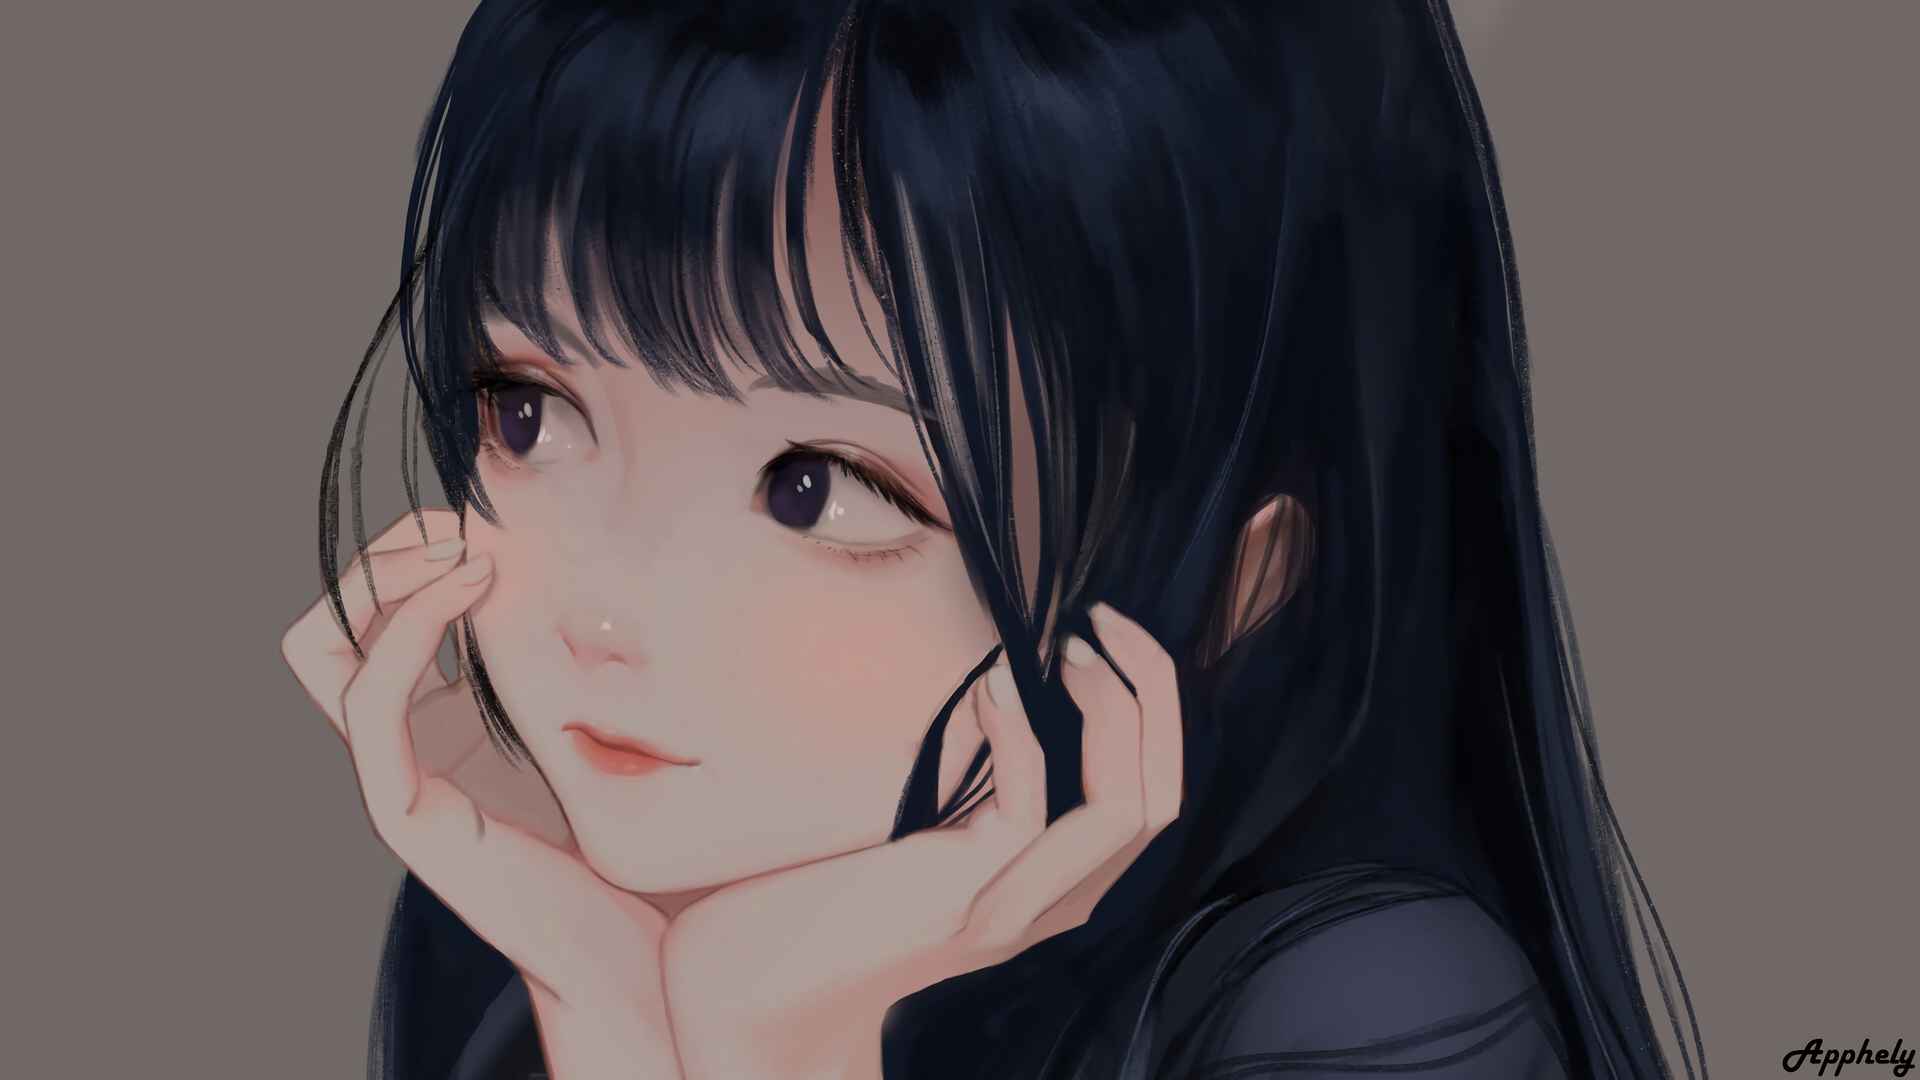 Blushing cute little girl thinks good -looking anime girl 4K wallpaper 3840x2160